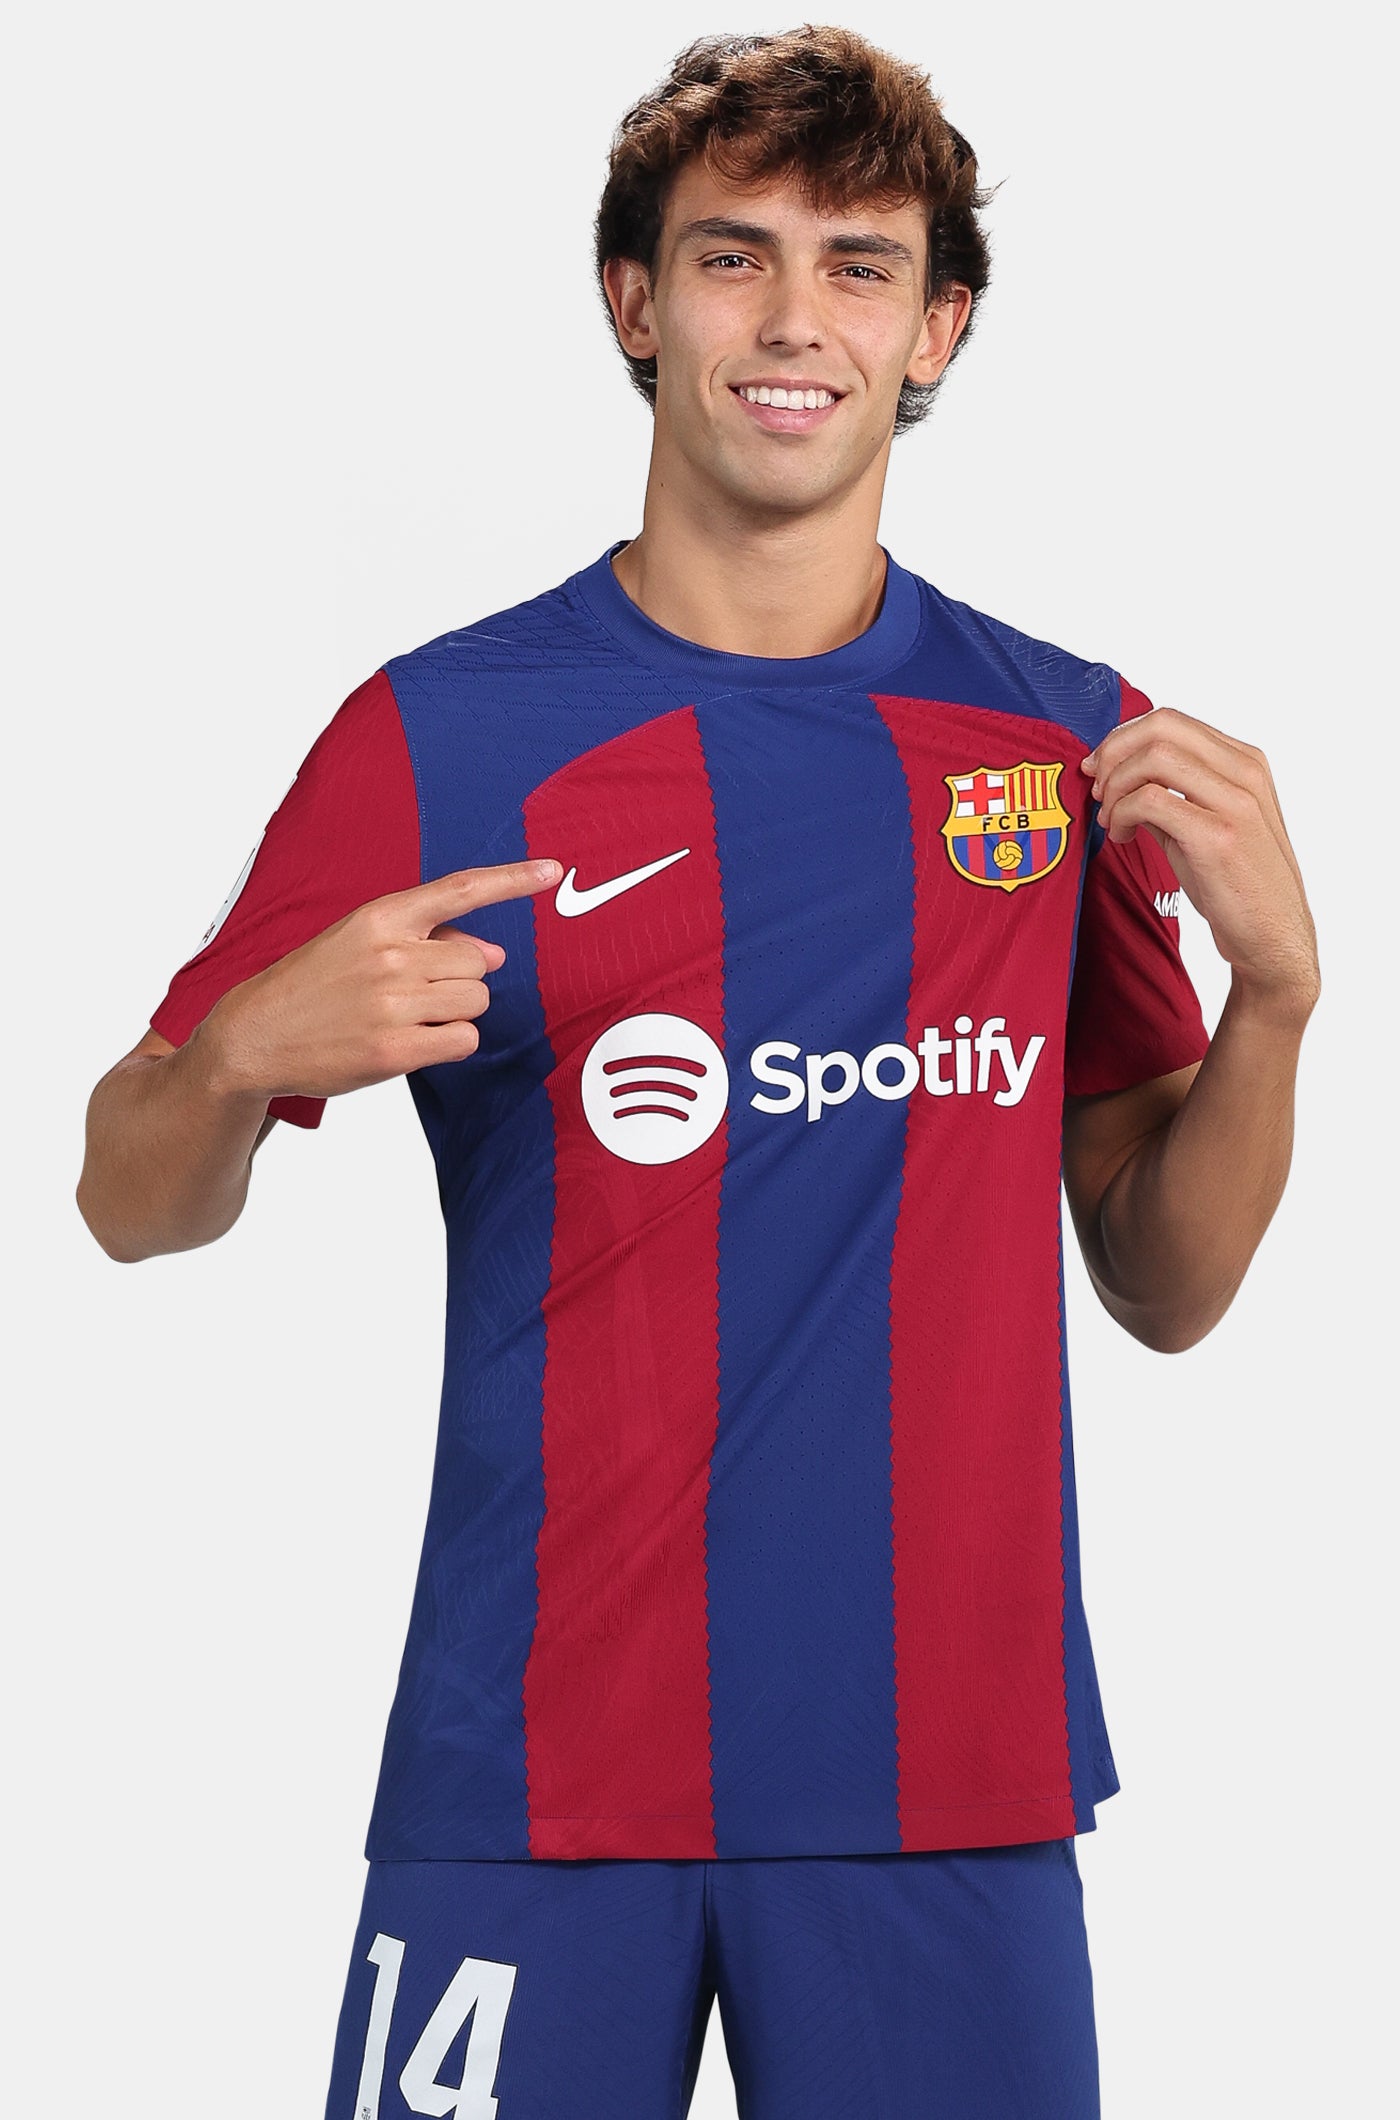 LFP FC Barcelona home shirt 23/24 Player's Edition - JOÃO FÉLIX